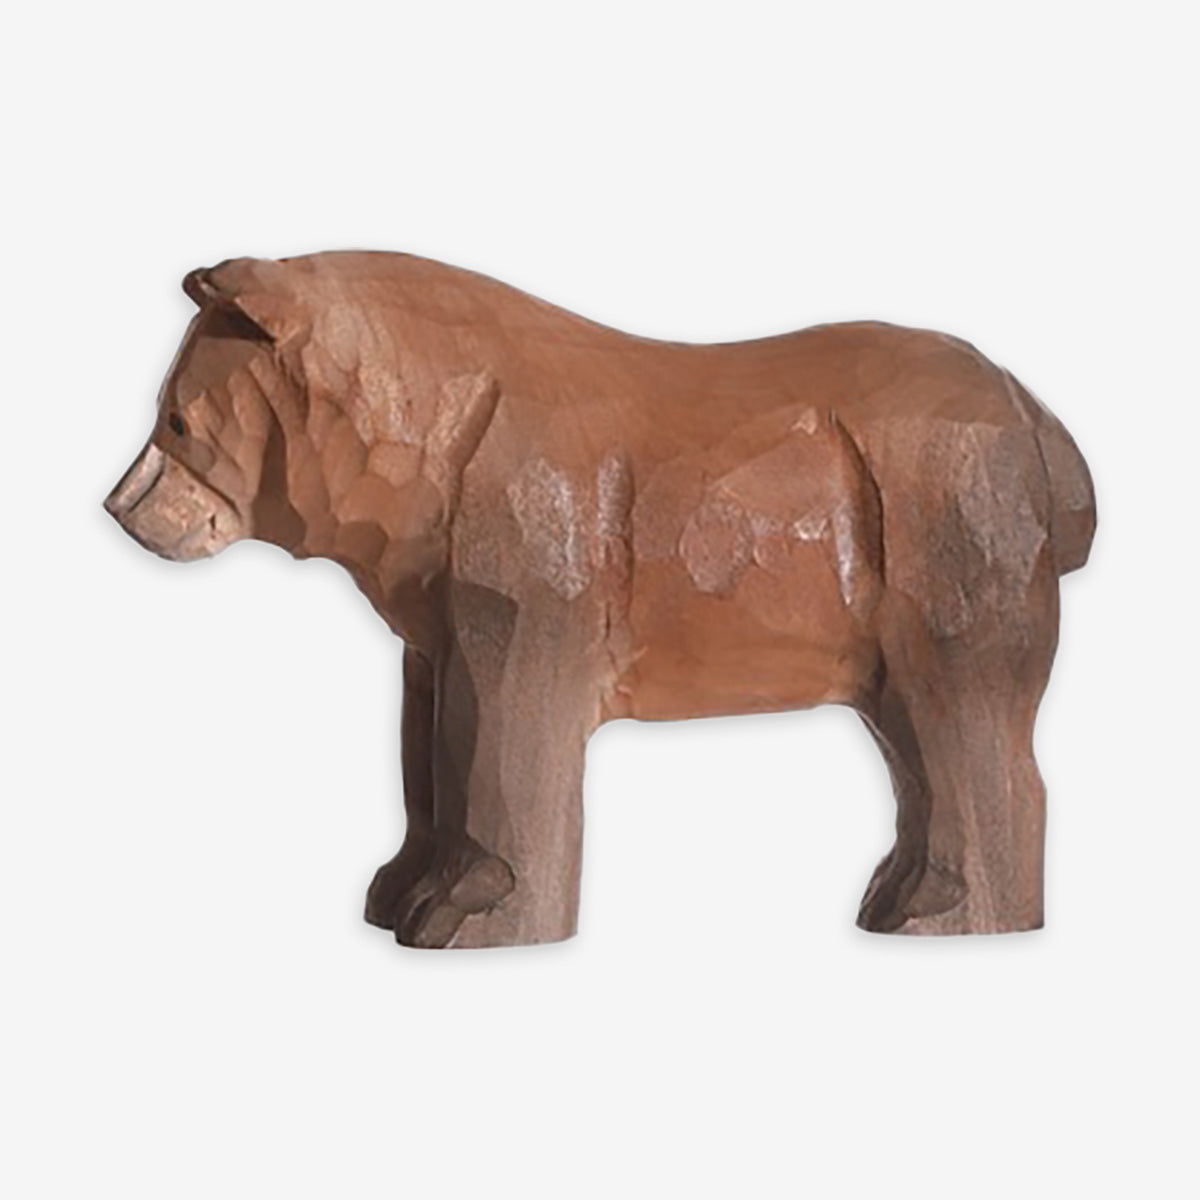 Wudimals Wooden Animal - Brown Bear